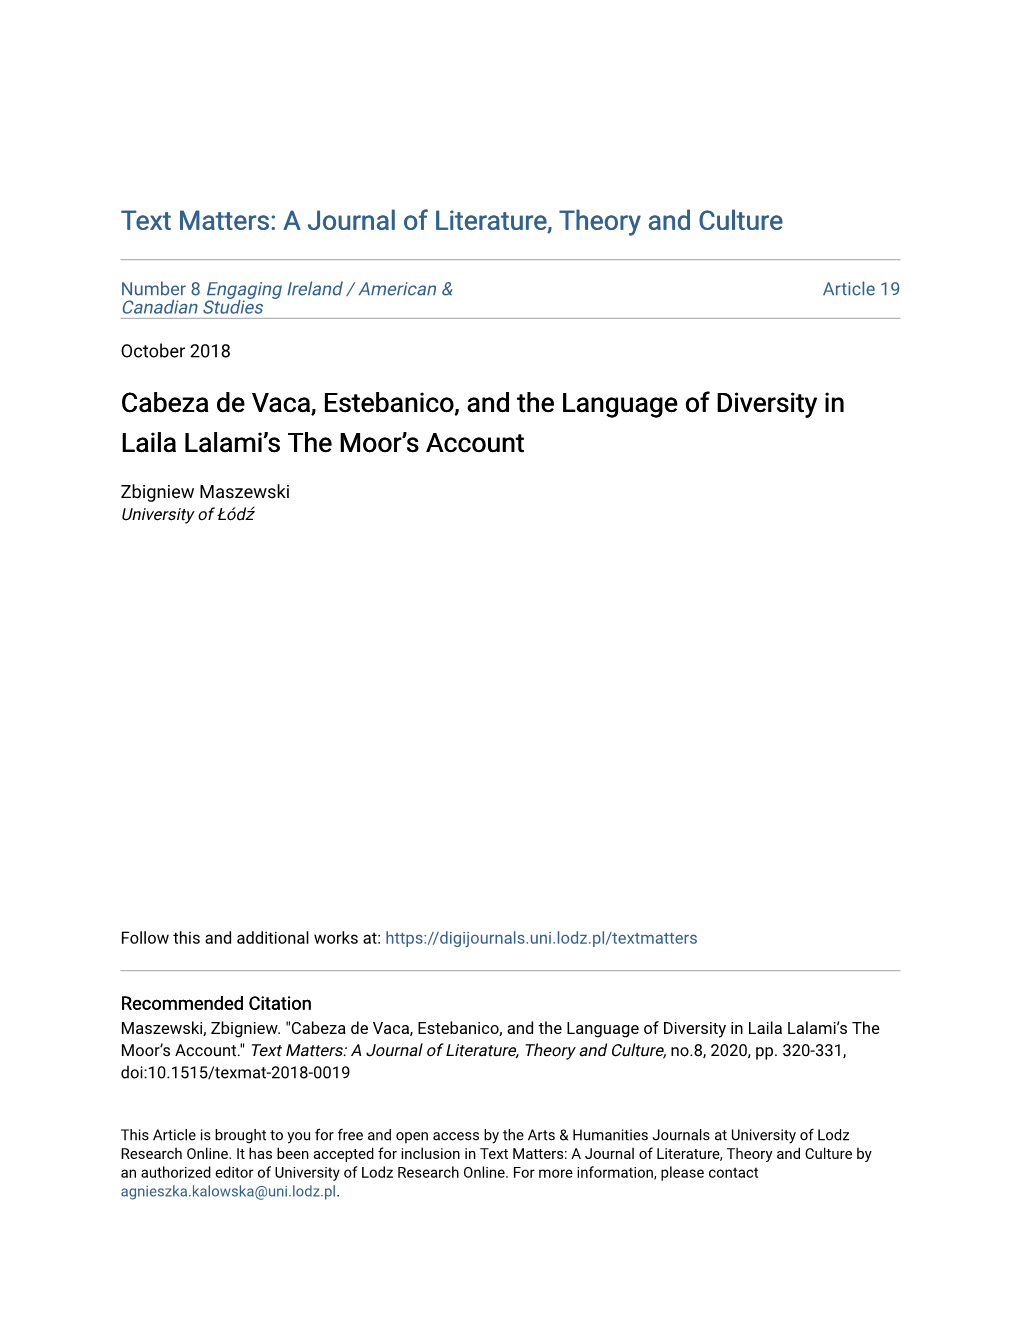 Cabeza De Vaca, Estebanico, and the Language of Diversity in Laila Lalami's the Moor's Account